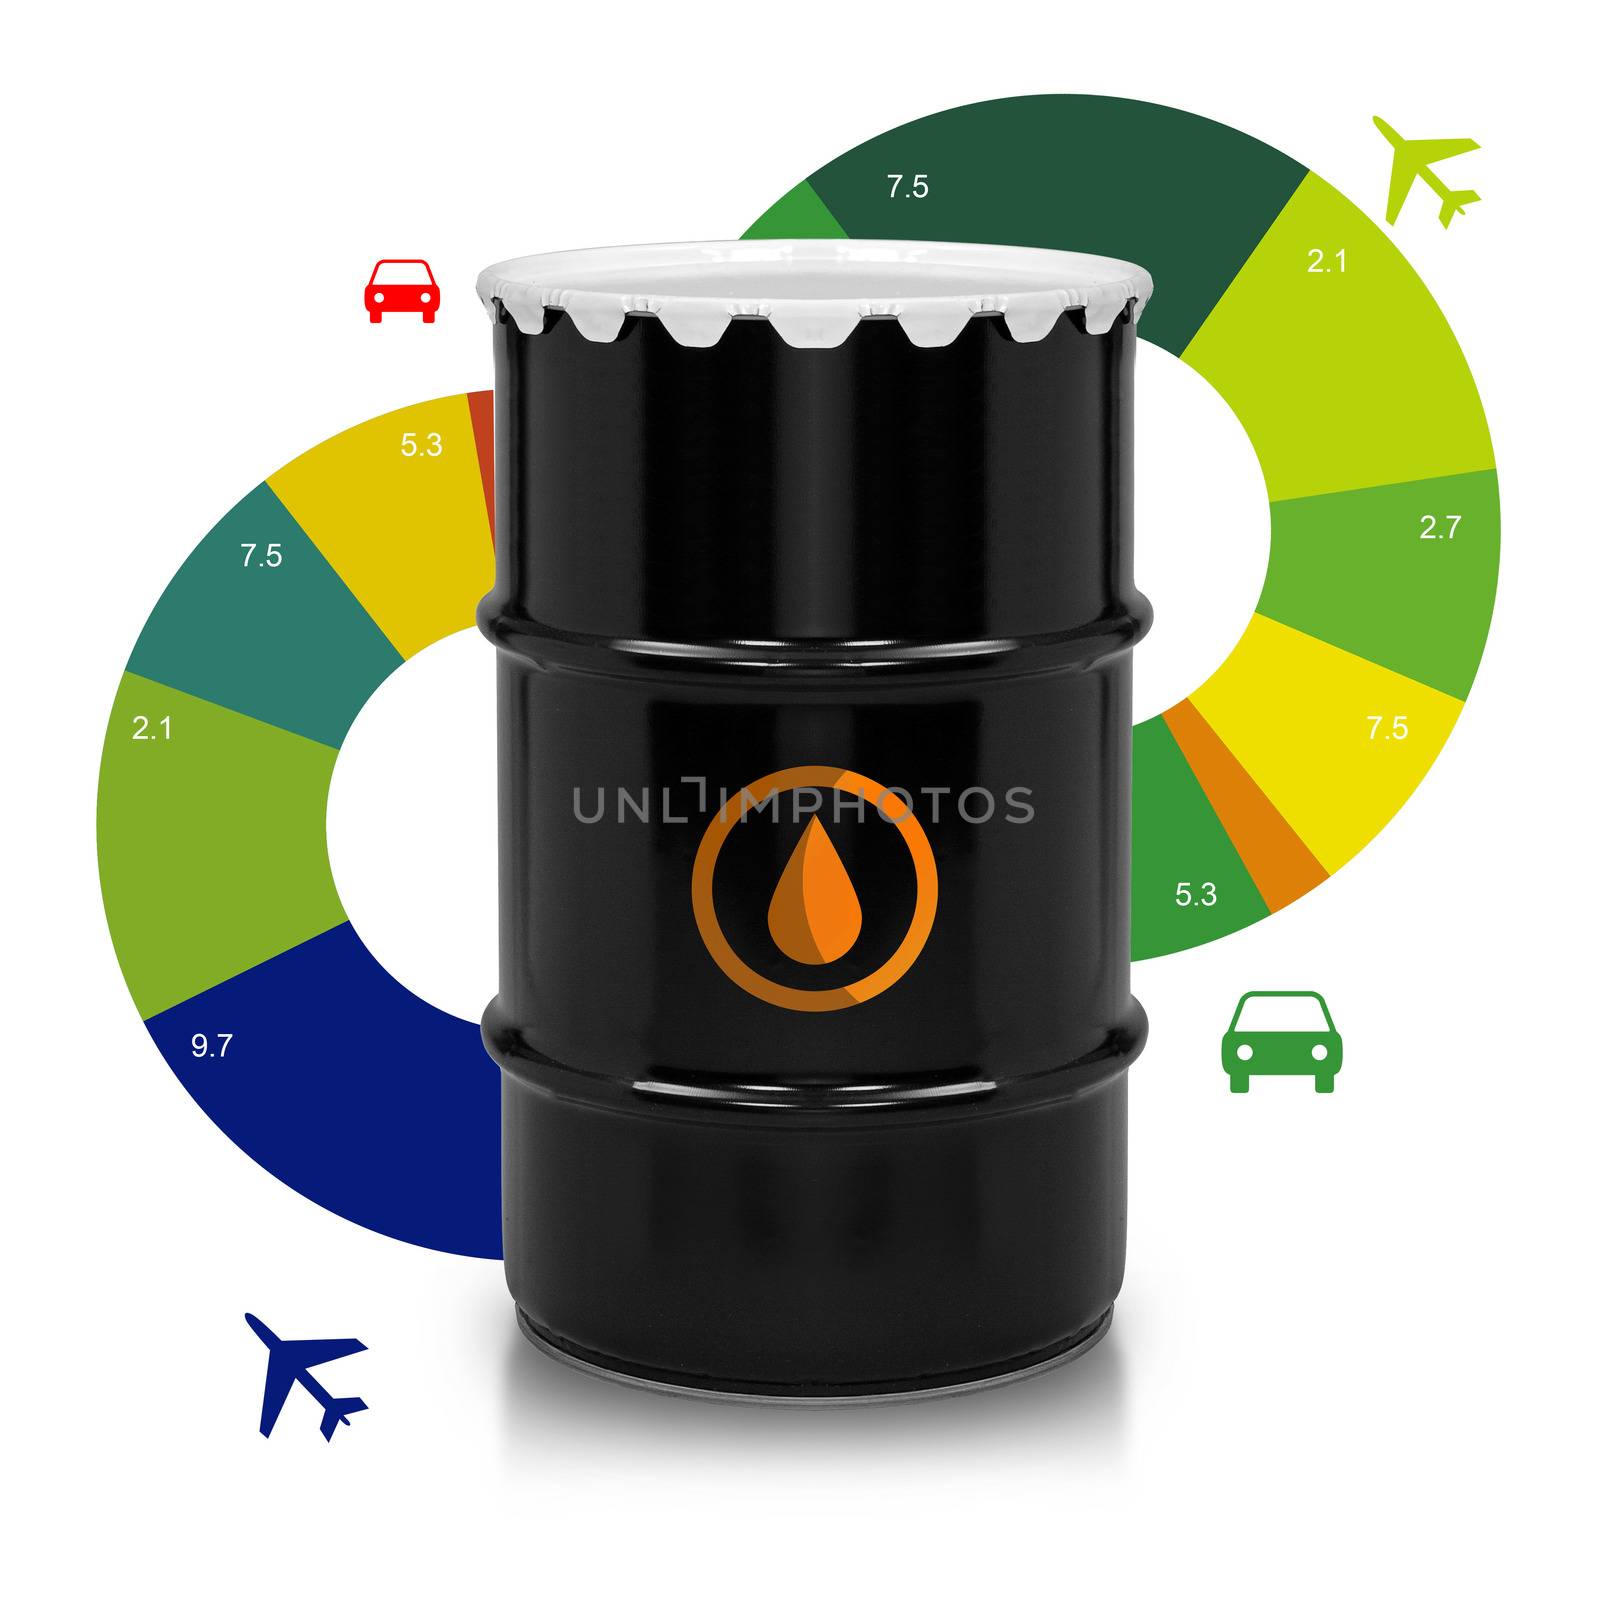 Petroleum Barrel by designsstock